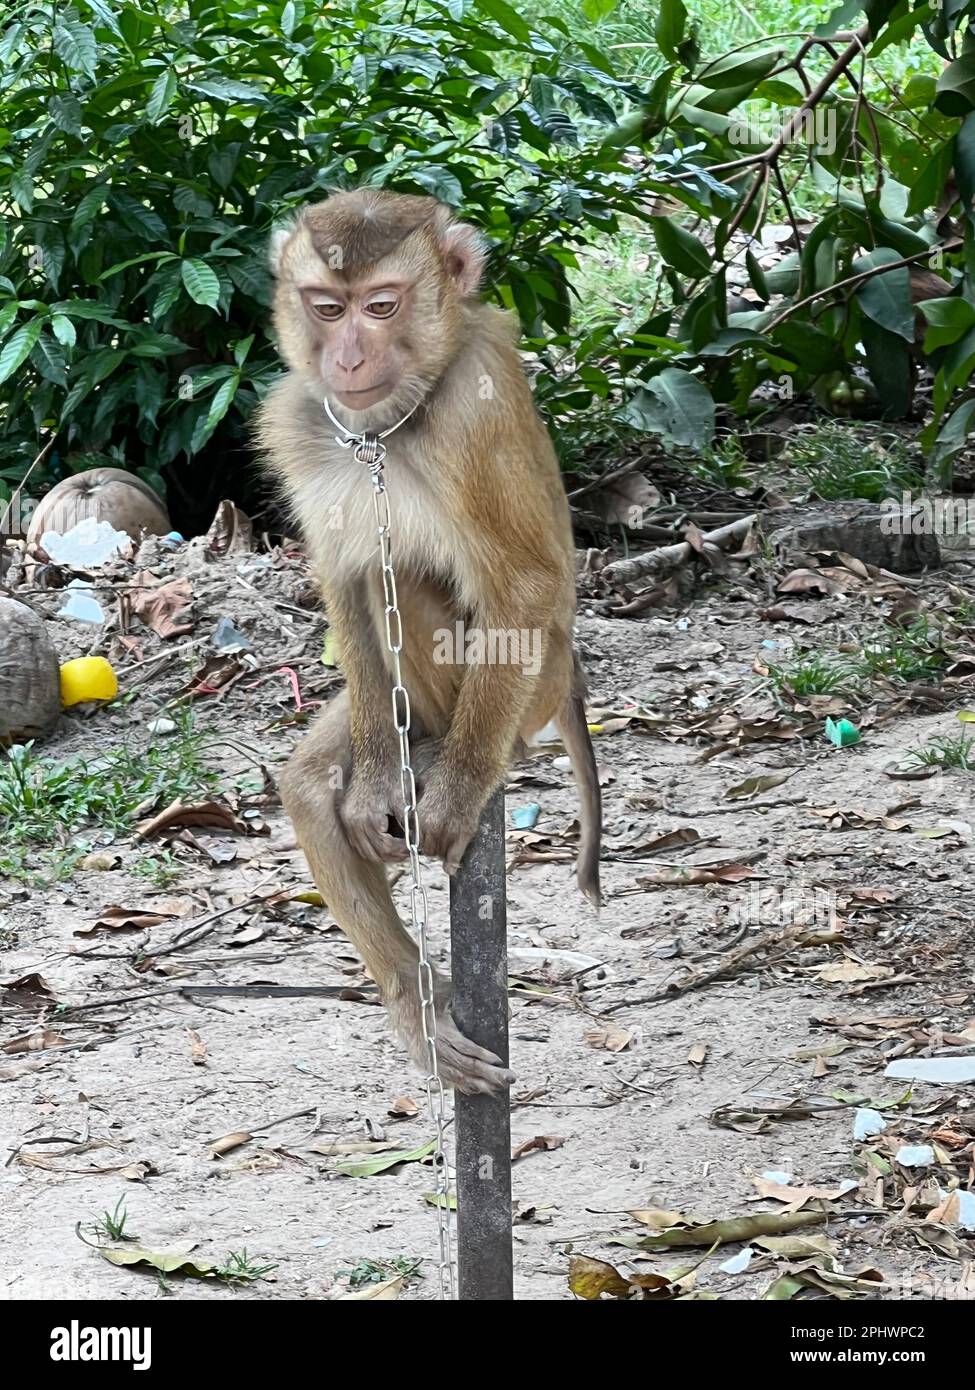 Albino Rhesus Macaque, Ko Samui, 2009 Stock Photo - Alamy